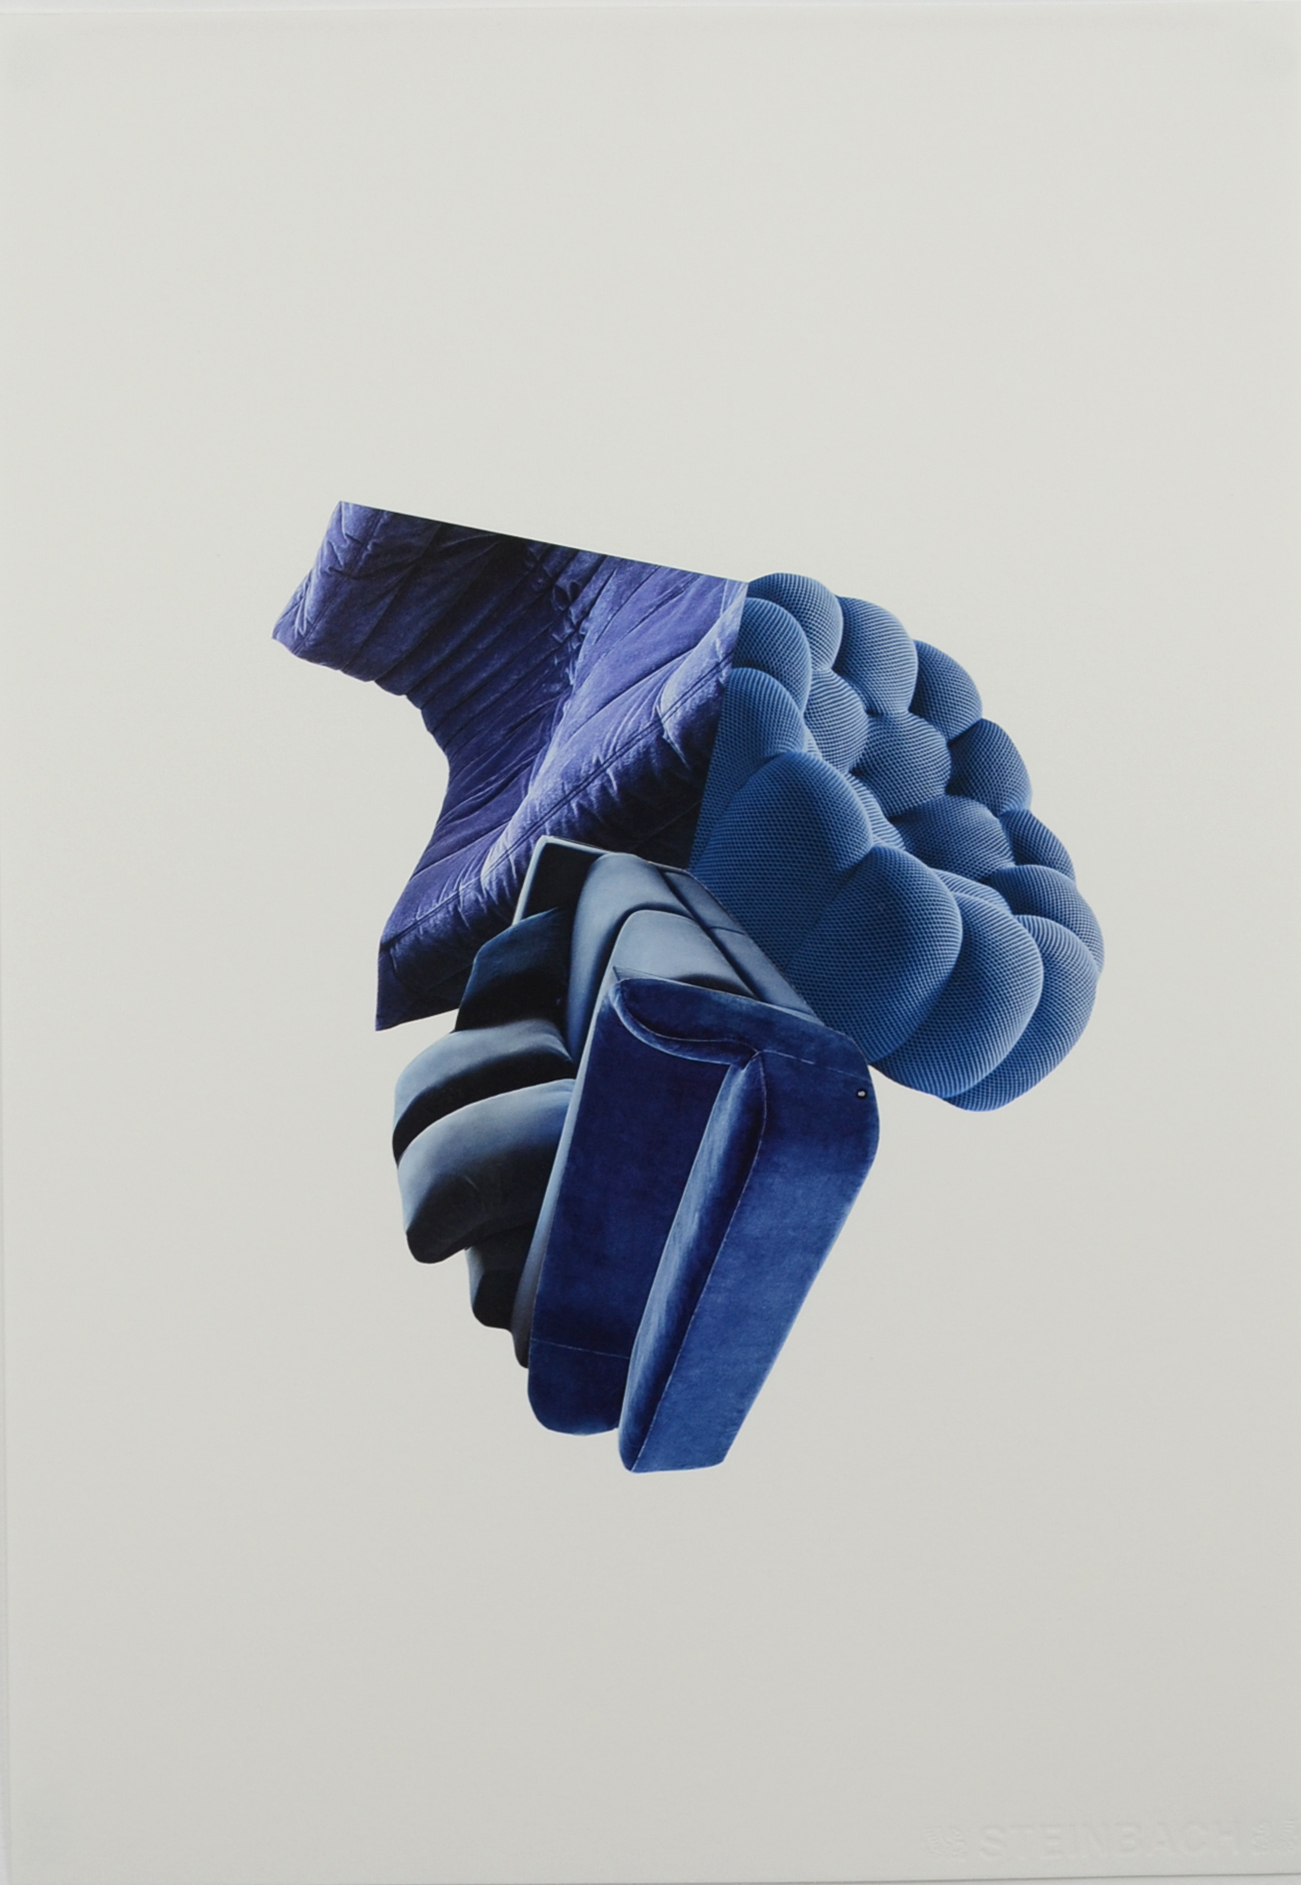 Hisae Ikenaga - Dcomposition en douceur, bleu, 2021